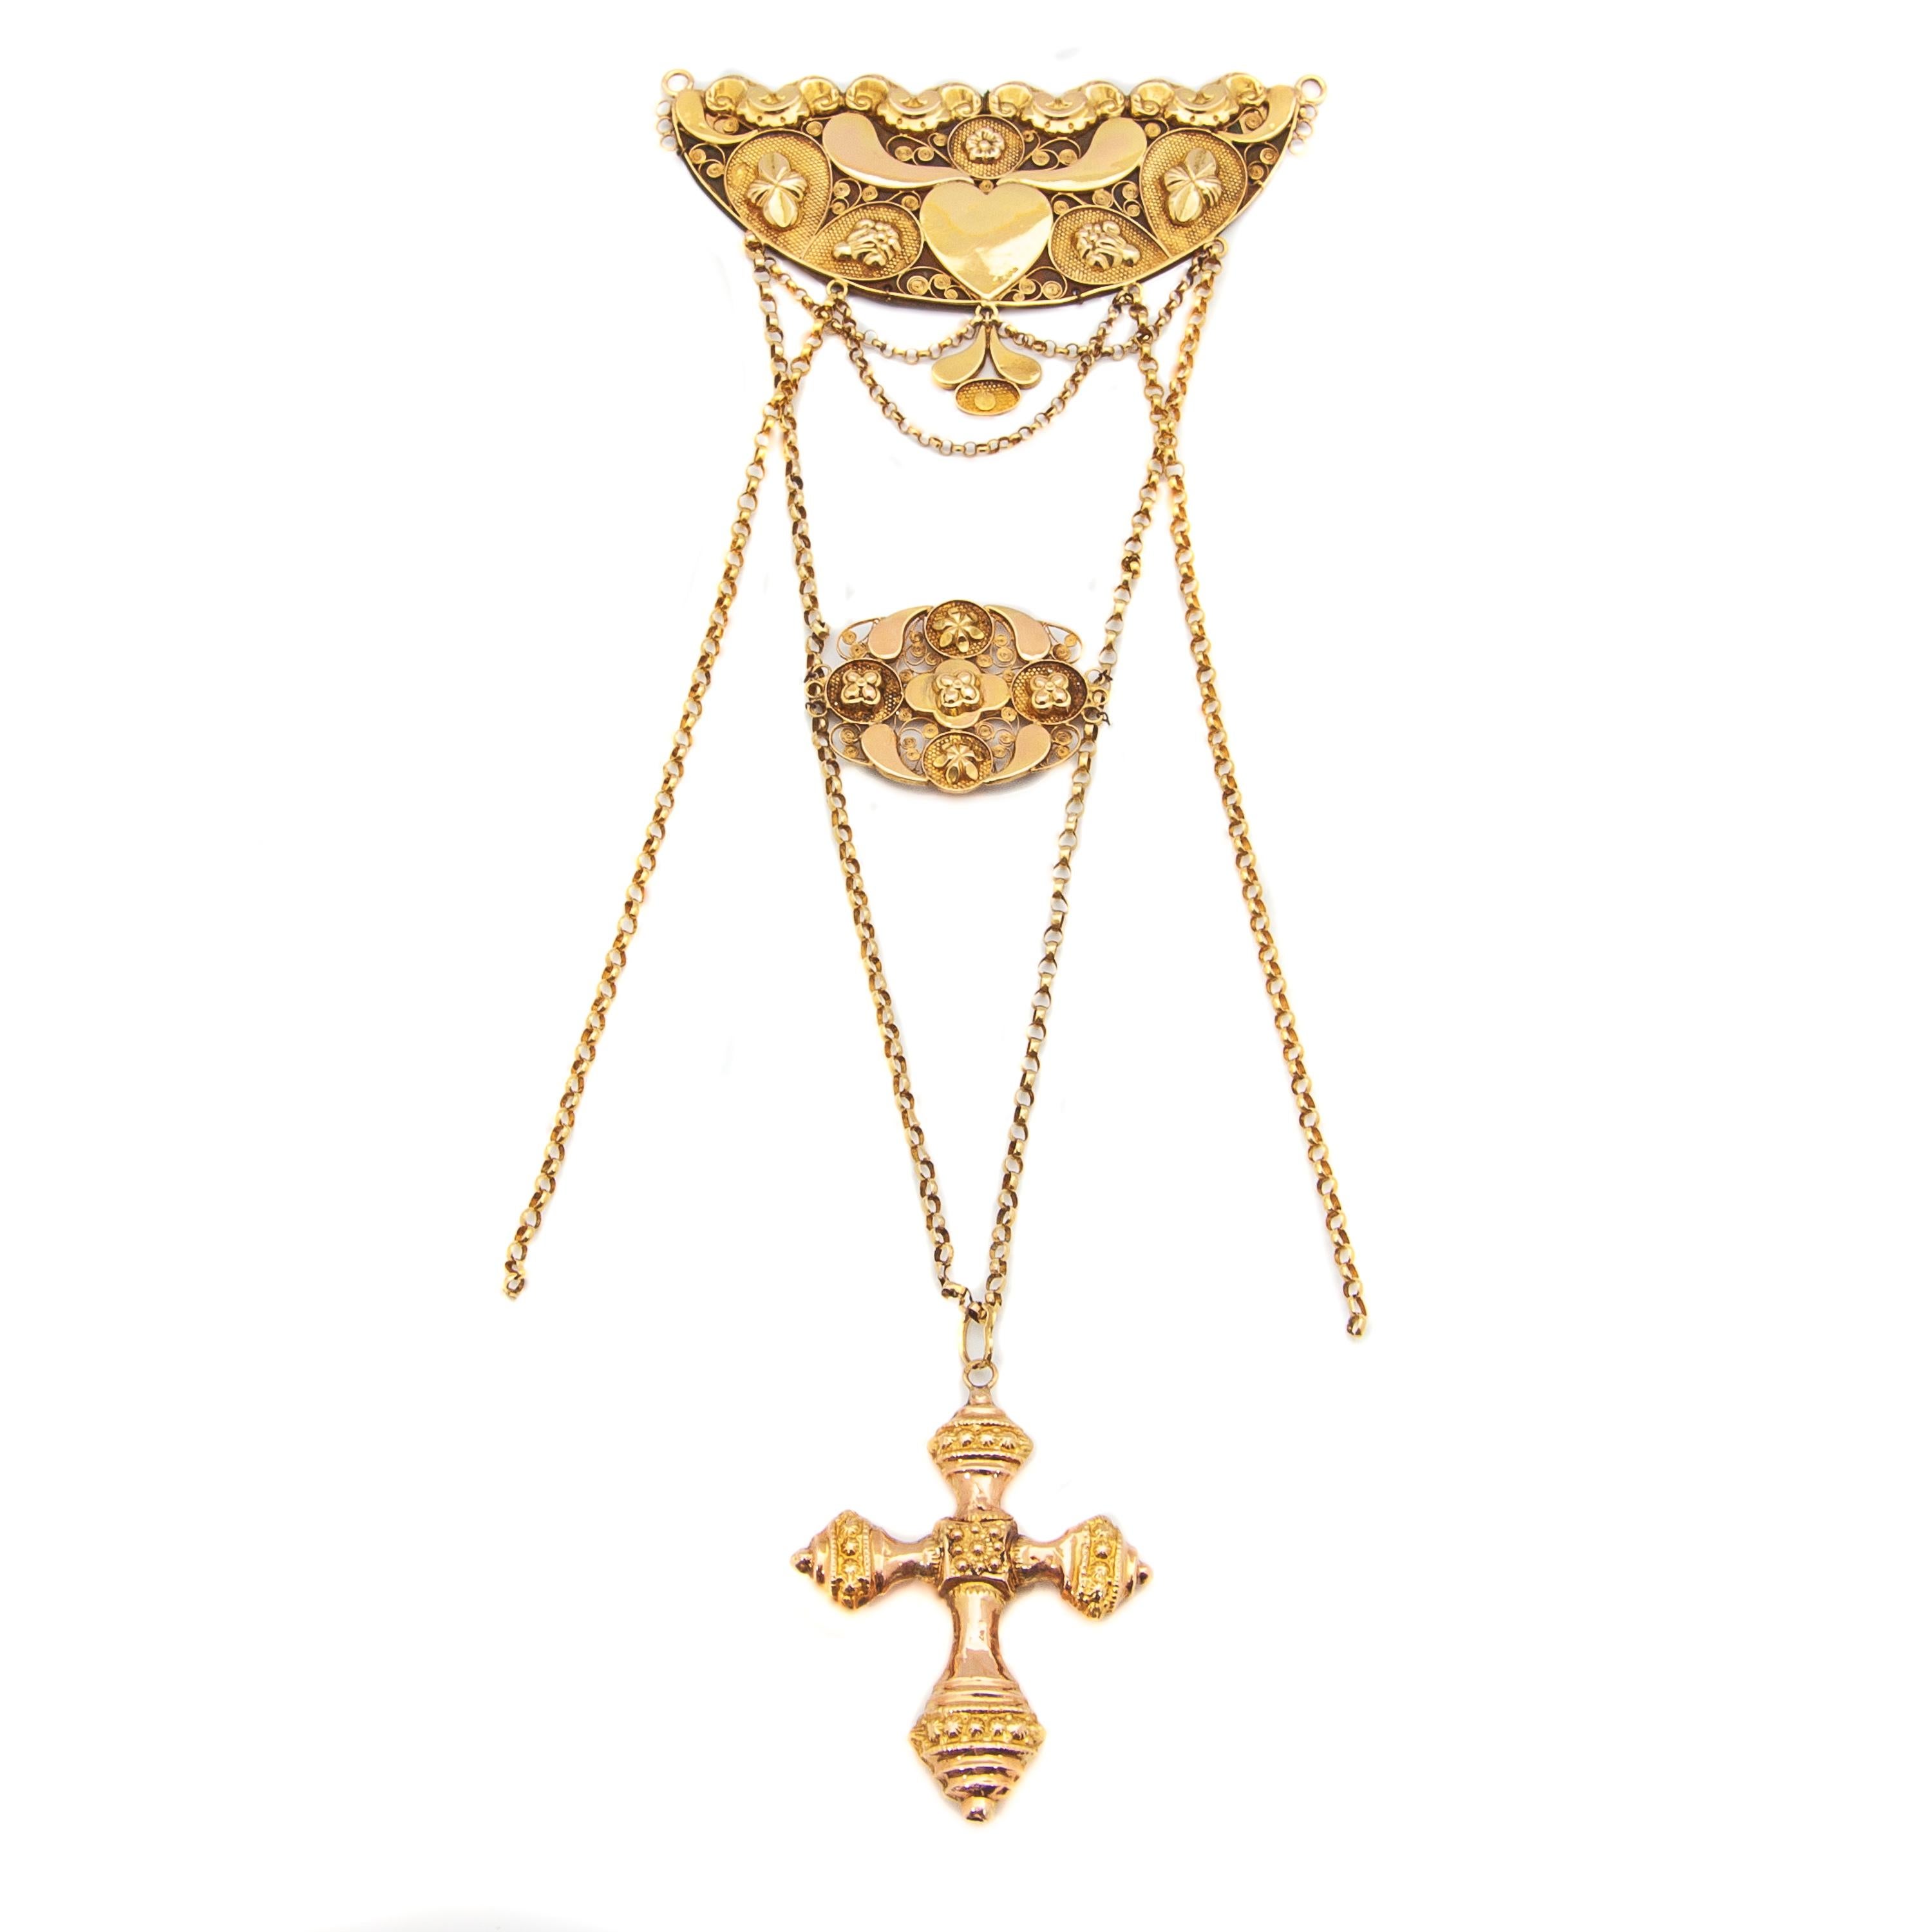 Antique 14K Gold Religious Chestpiece Pendant For Sale 1